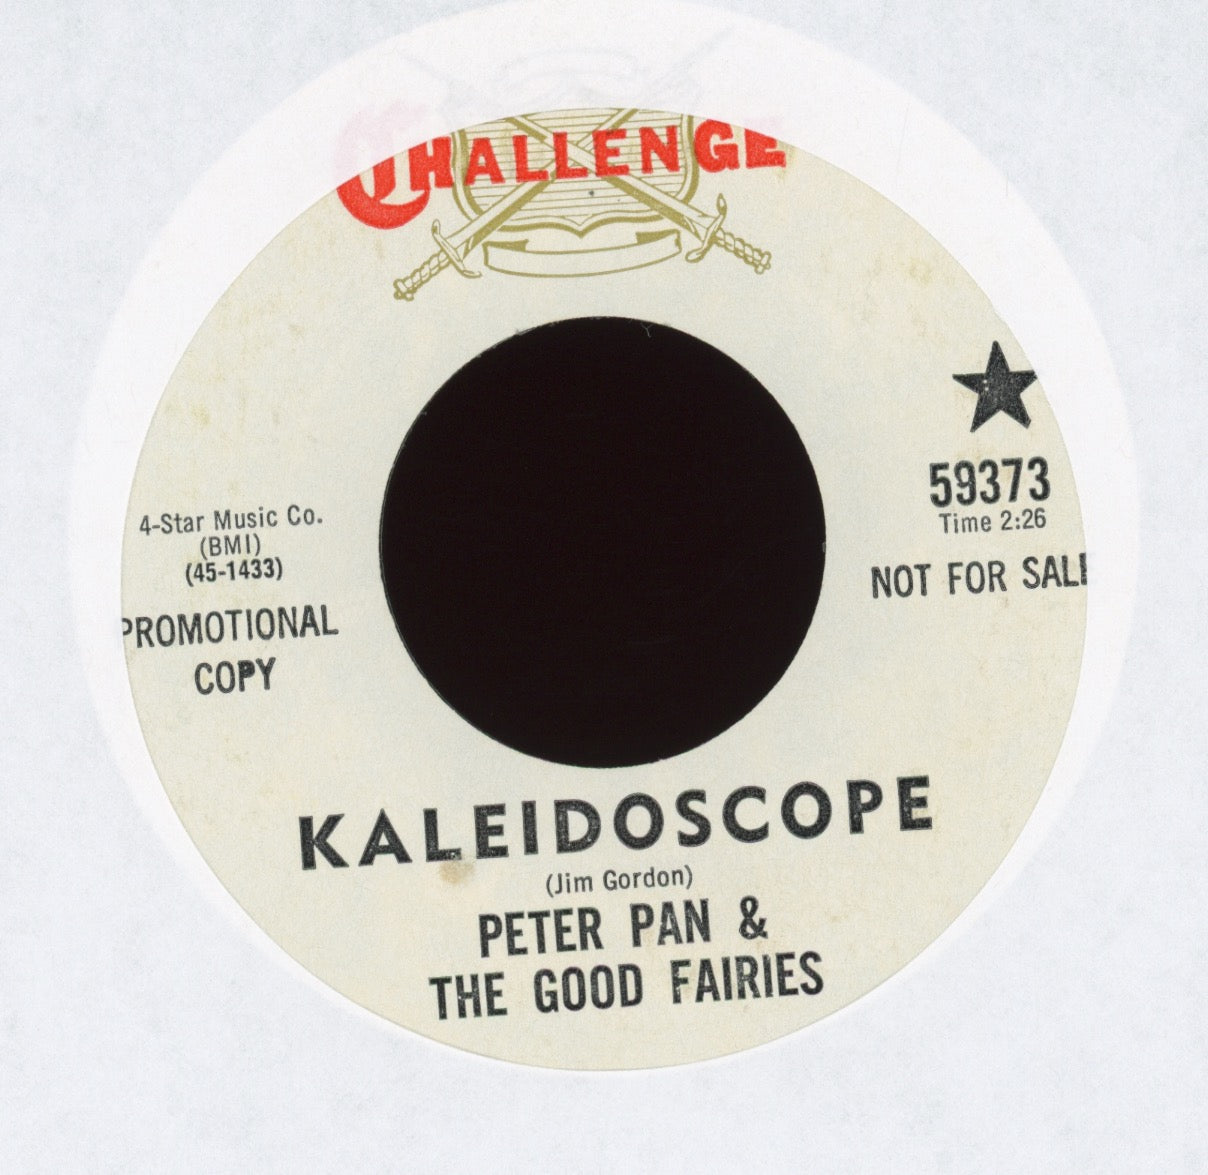 Peter Pan & The Good Fairies - Kaleidoscope on Challenge Promo Psych 45